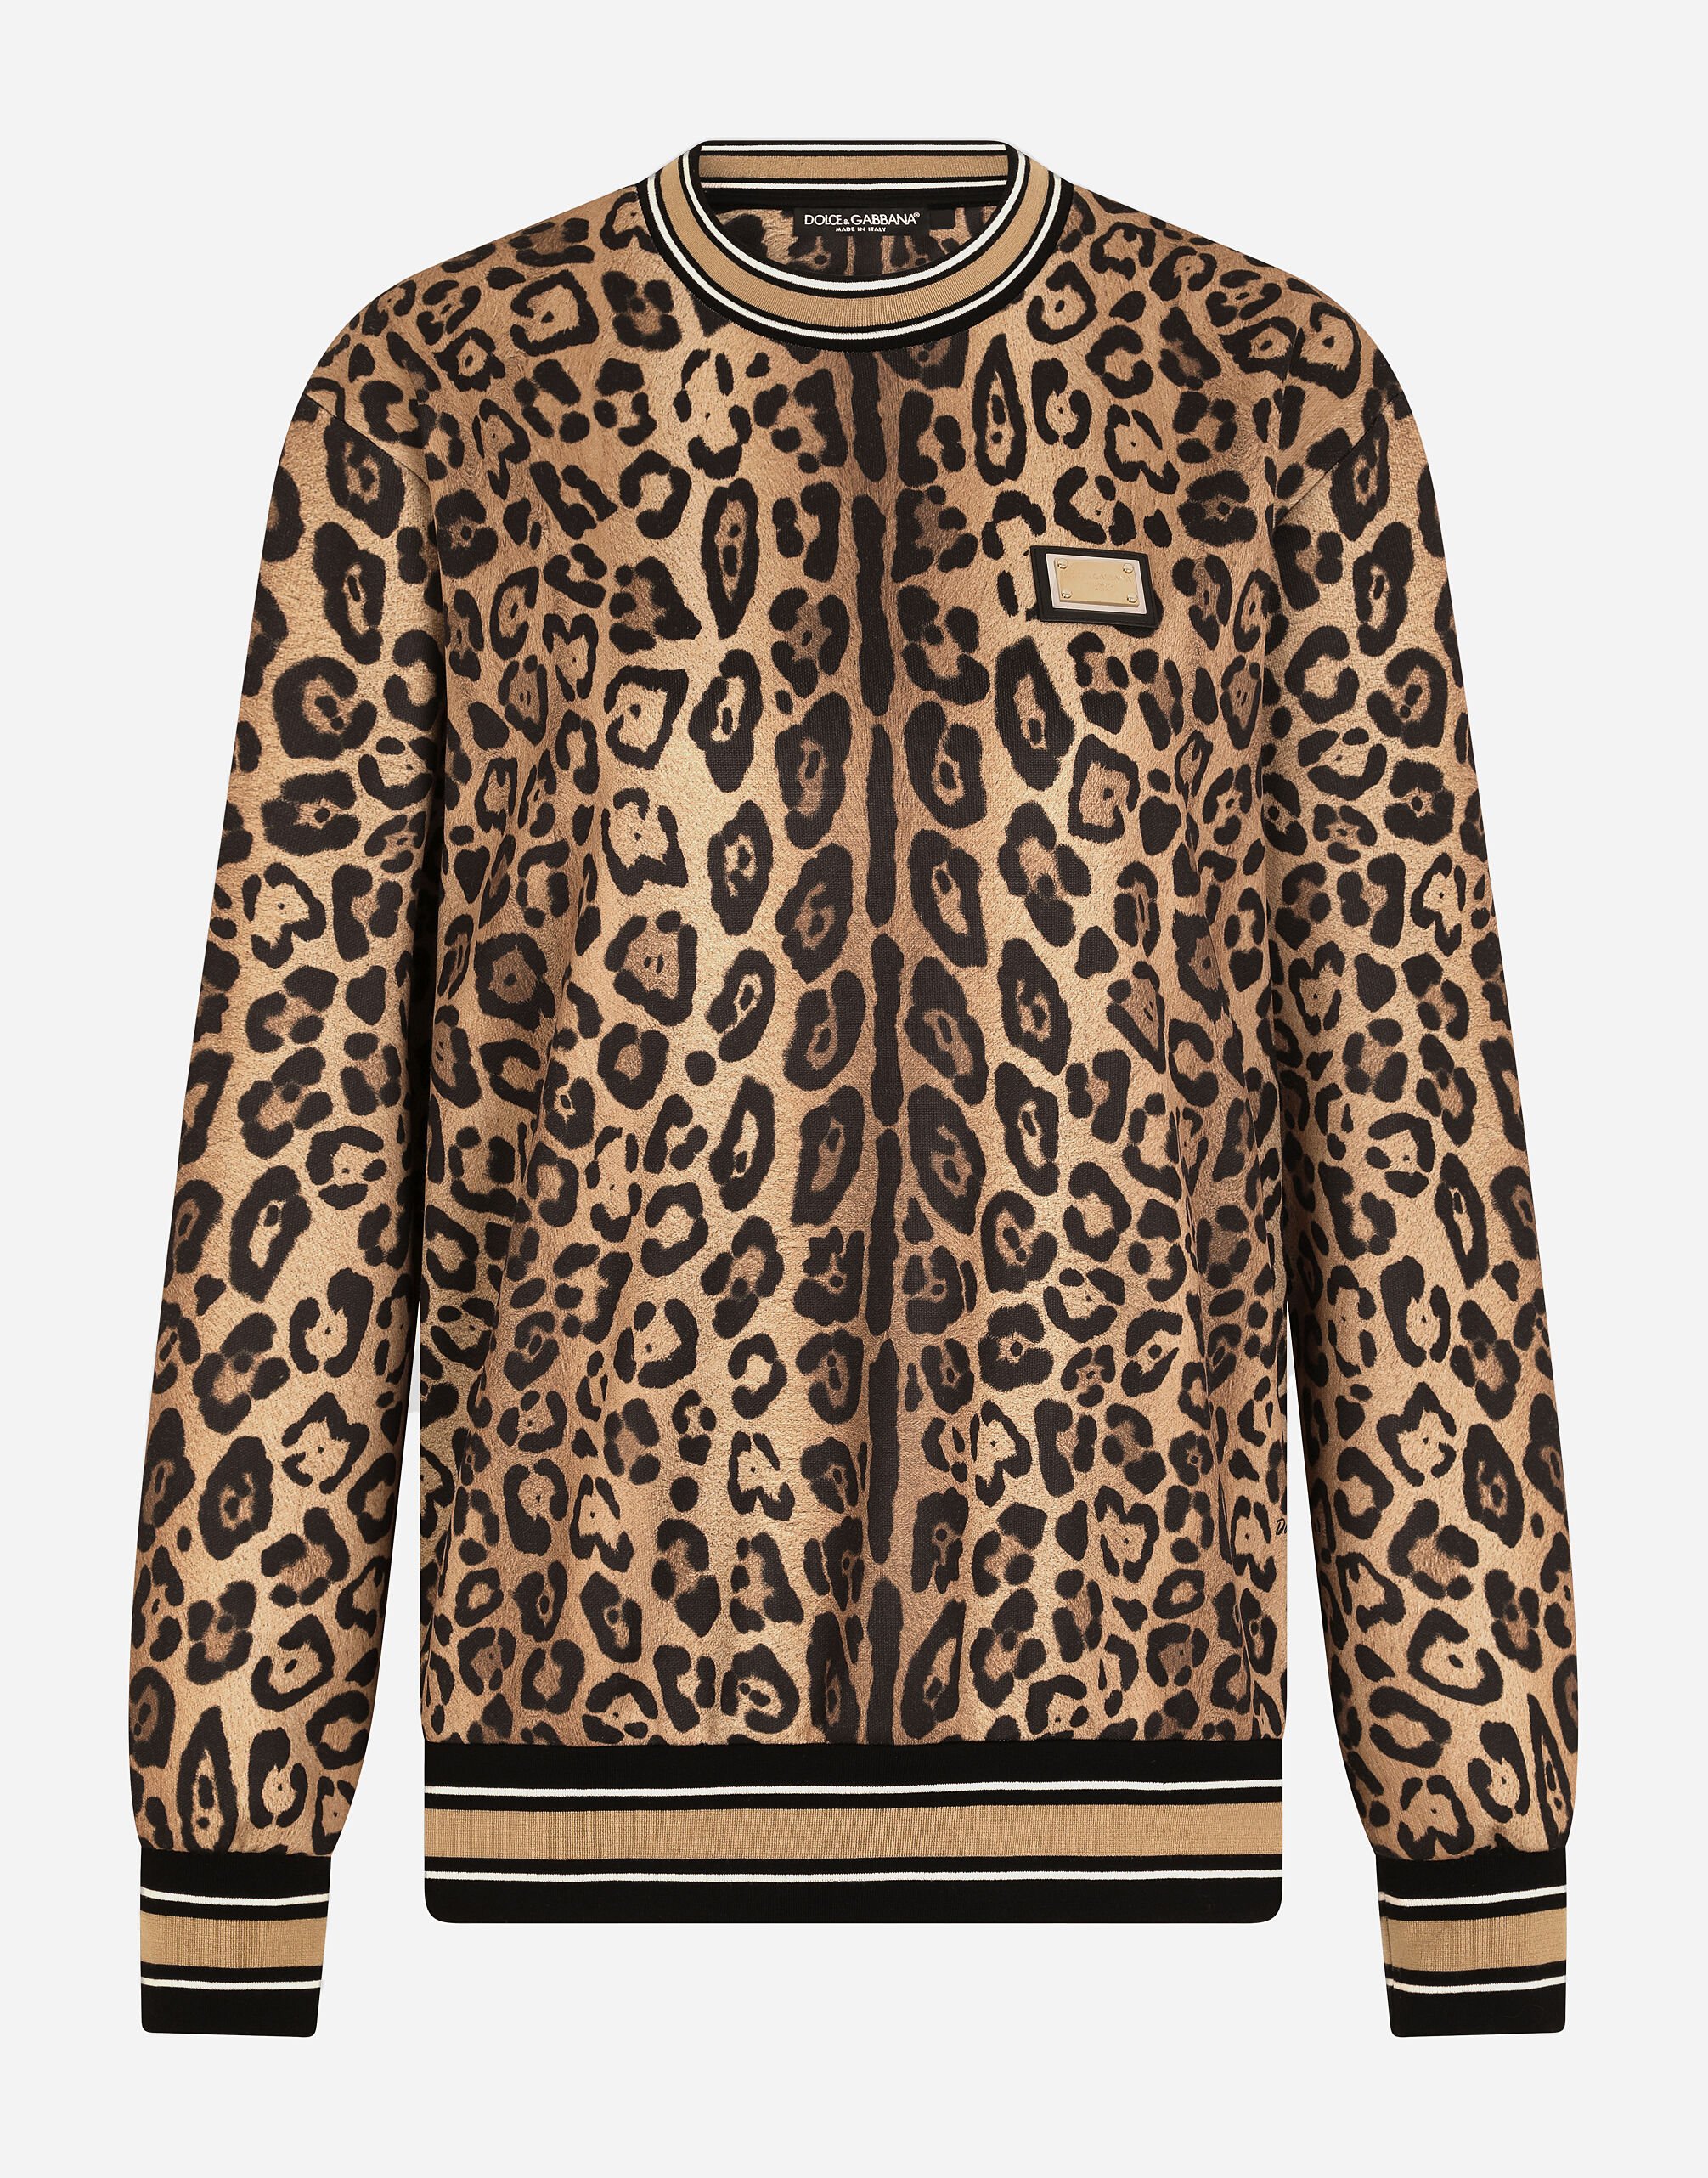 Dolce & Gabbana Fall/Winter 2019-2020 - Animal  Animal print fashion,  Leopard print outfits, Animal print outfits